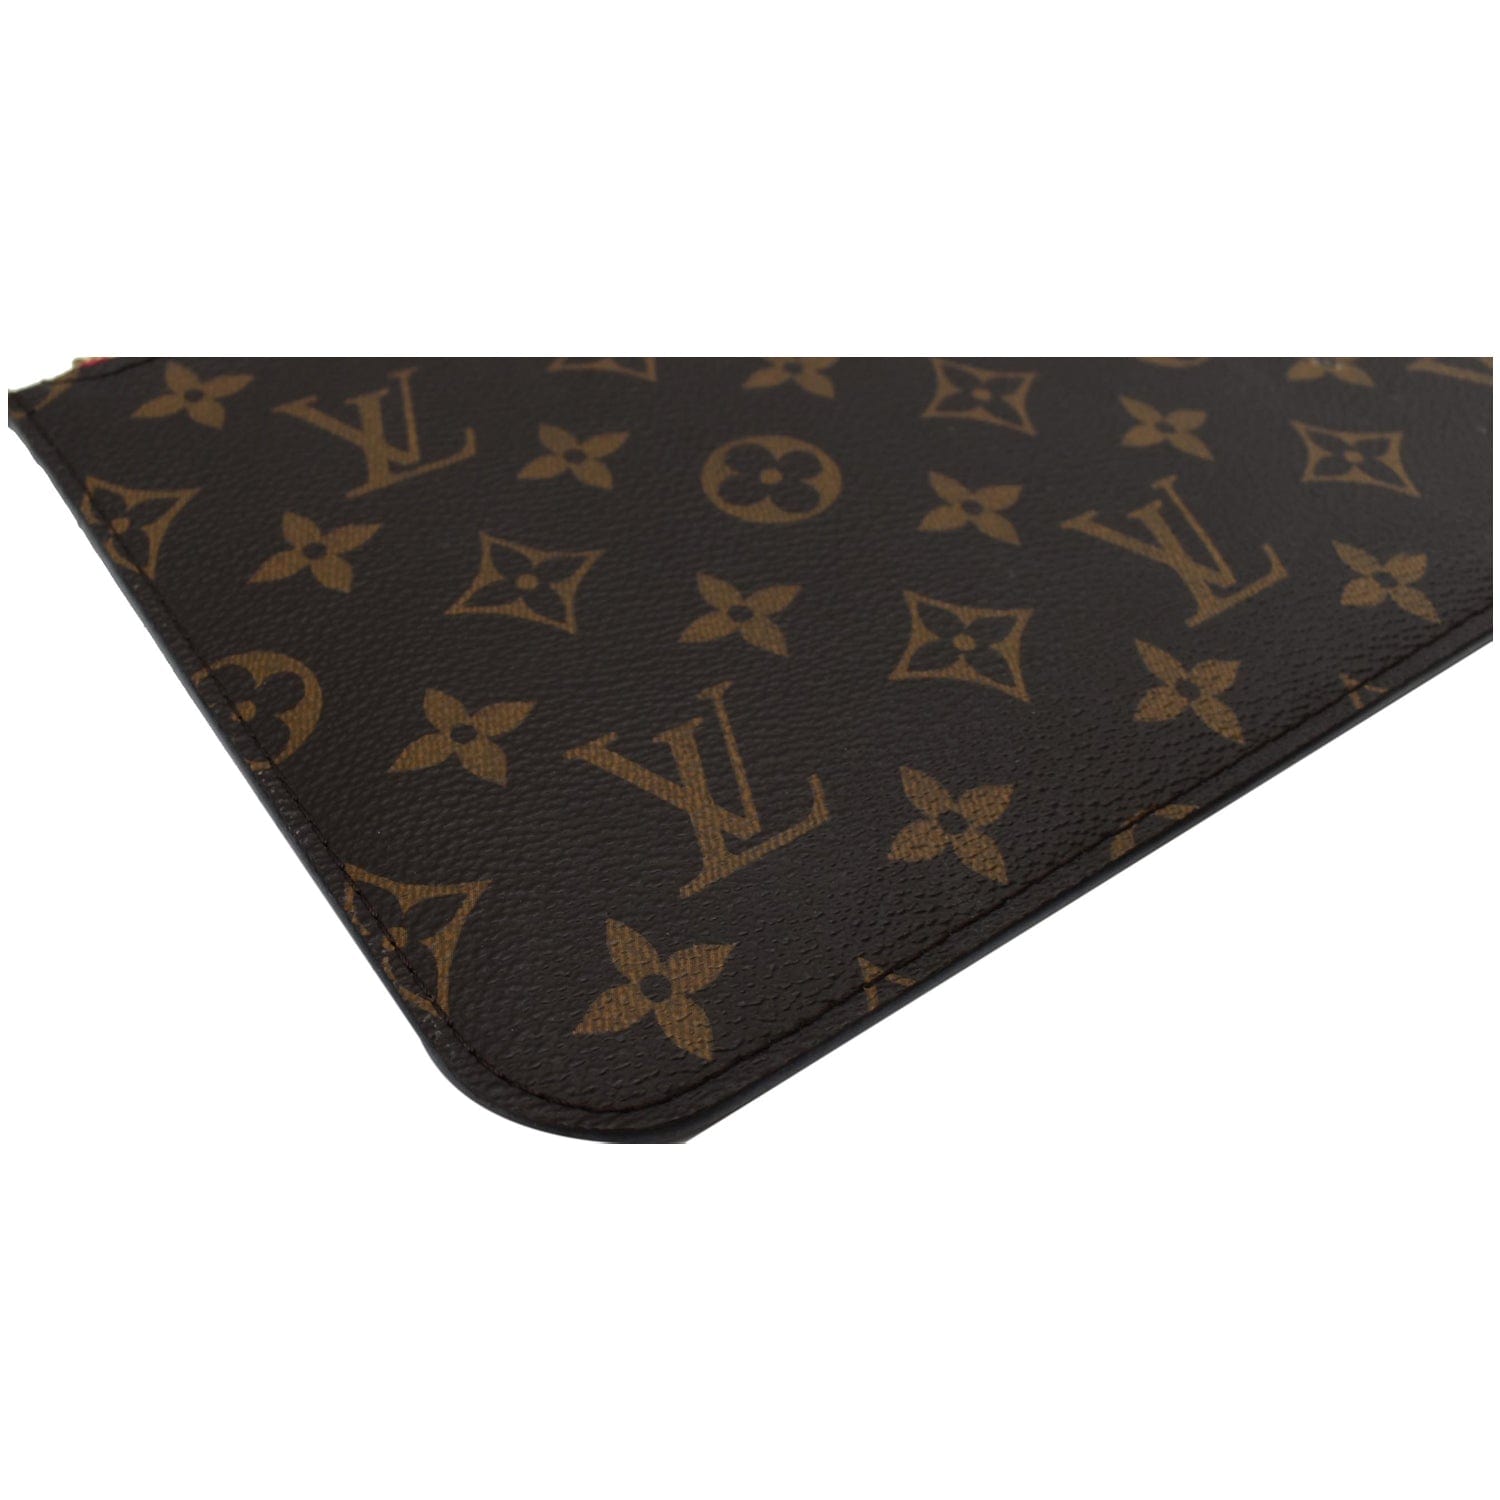 Louis Vuitton Neverfull pochette. $450 To purchase: Online website link in  bio Cmstmatthews.com #shopcm #cmstmatthews #shoplocal…